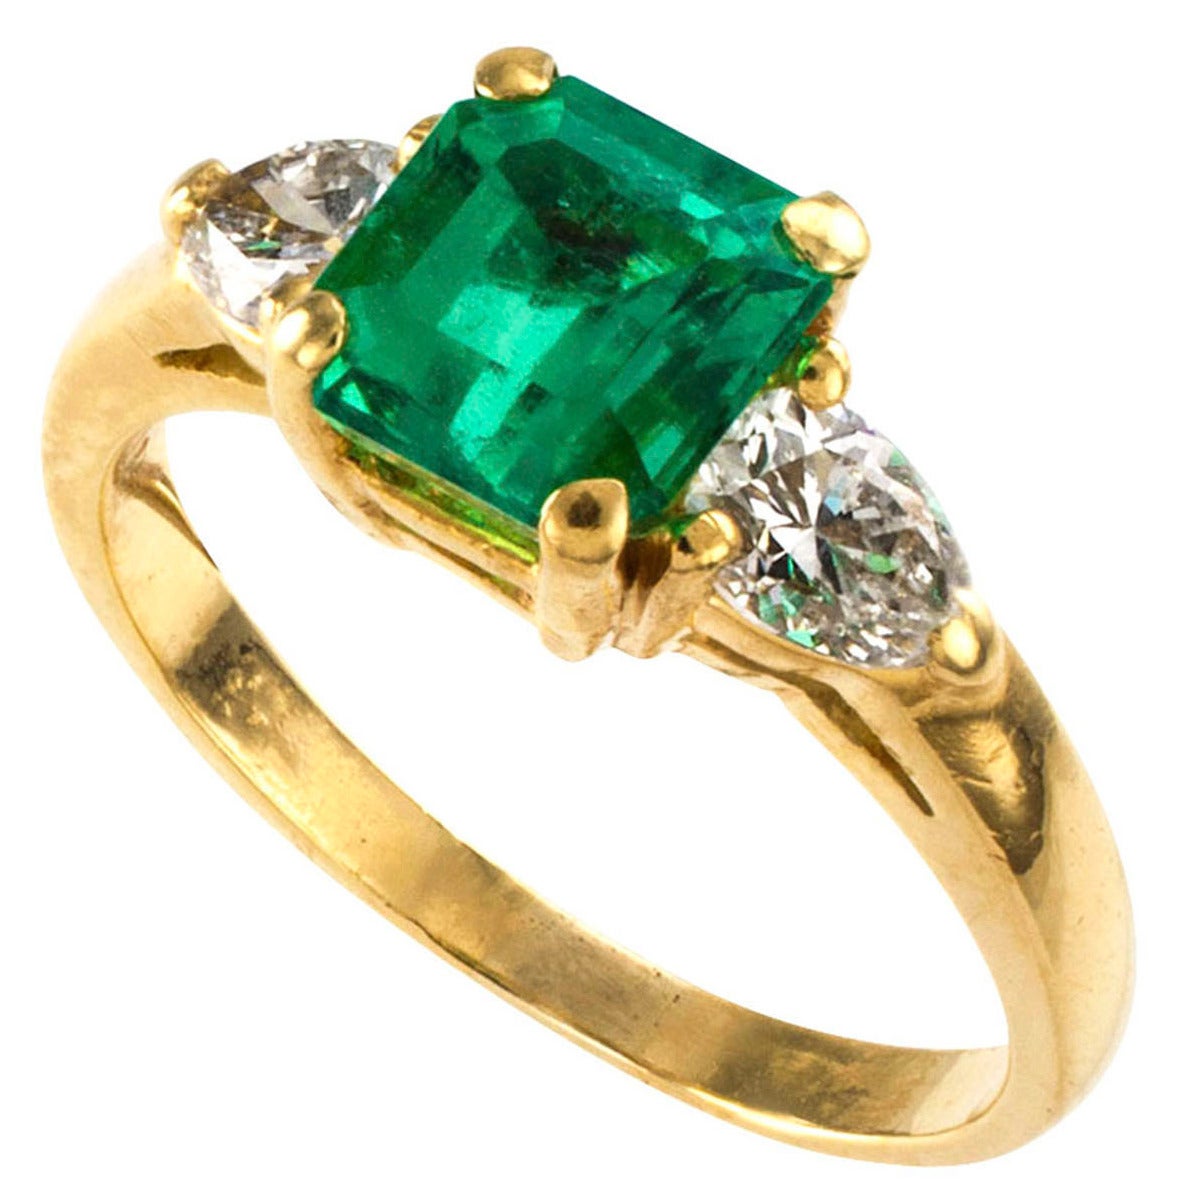 Emerald-Cut Emerald and Pear-Shaped Diamond Ring